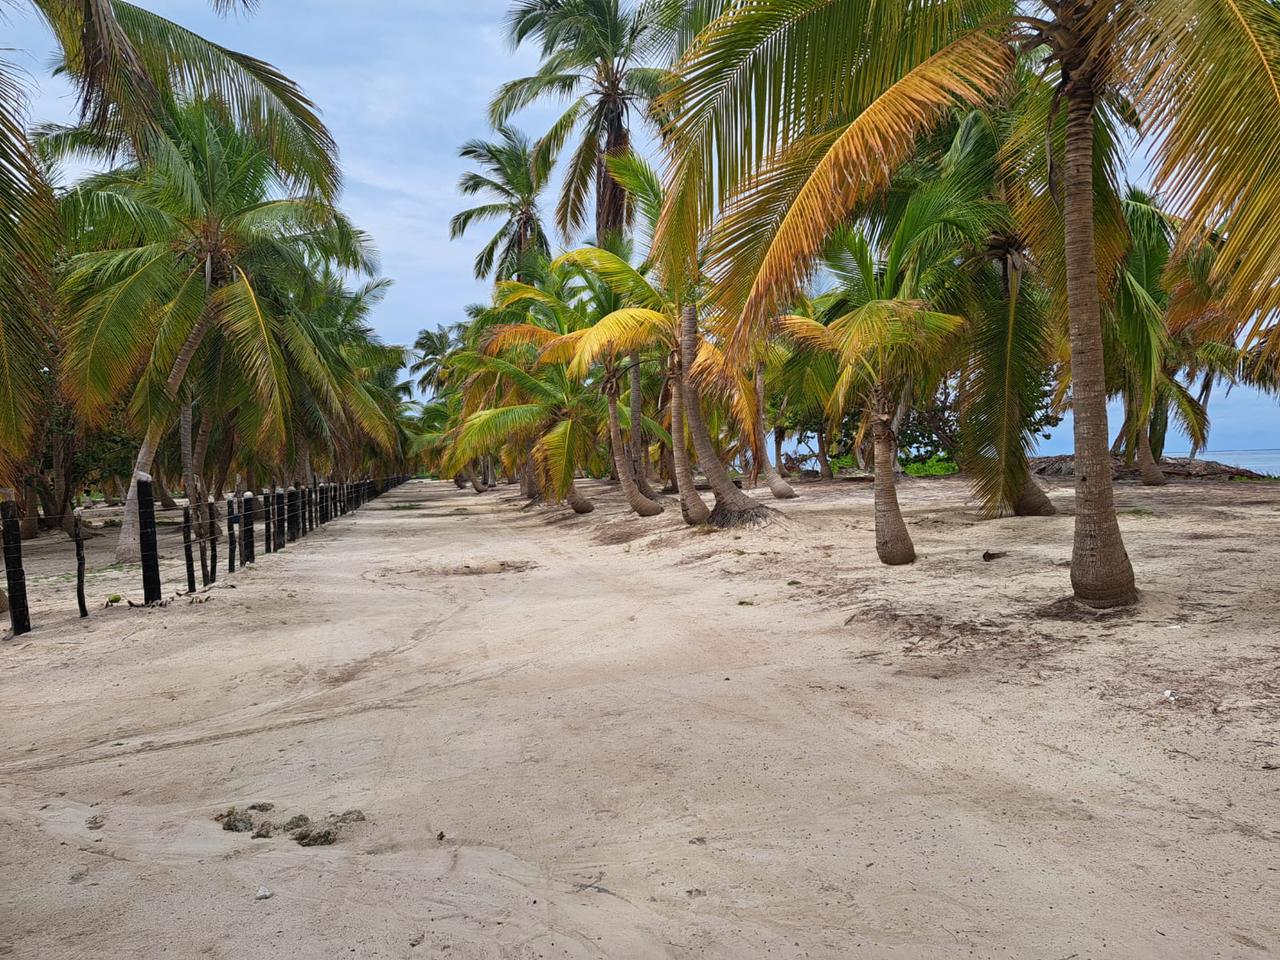 Autoridades resuelven “grave” violación al libre acceso público a playa Cabeza de Toro